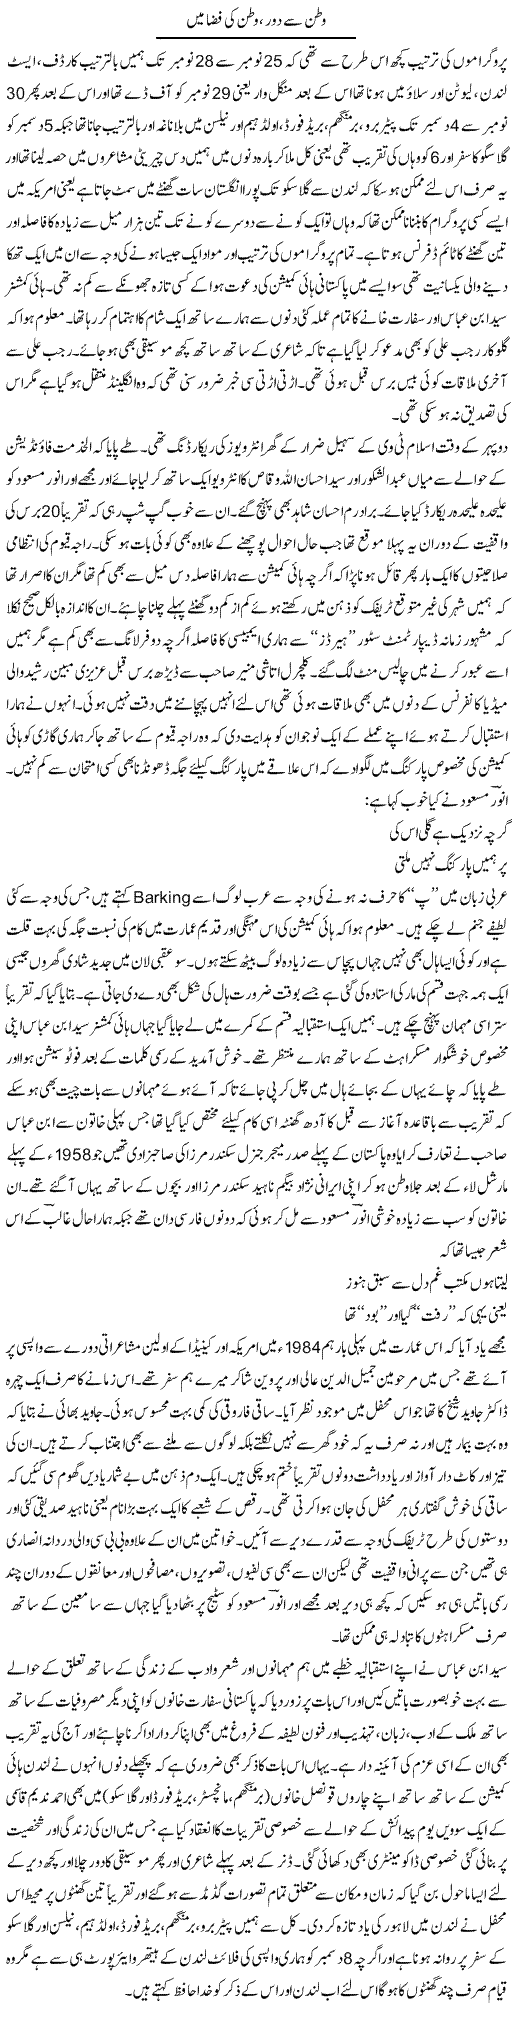 Watan Se Daur, Watan Ki Fiza Mein | Amjad Islam Amjad | Daily Urdu Columns